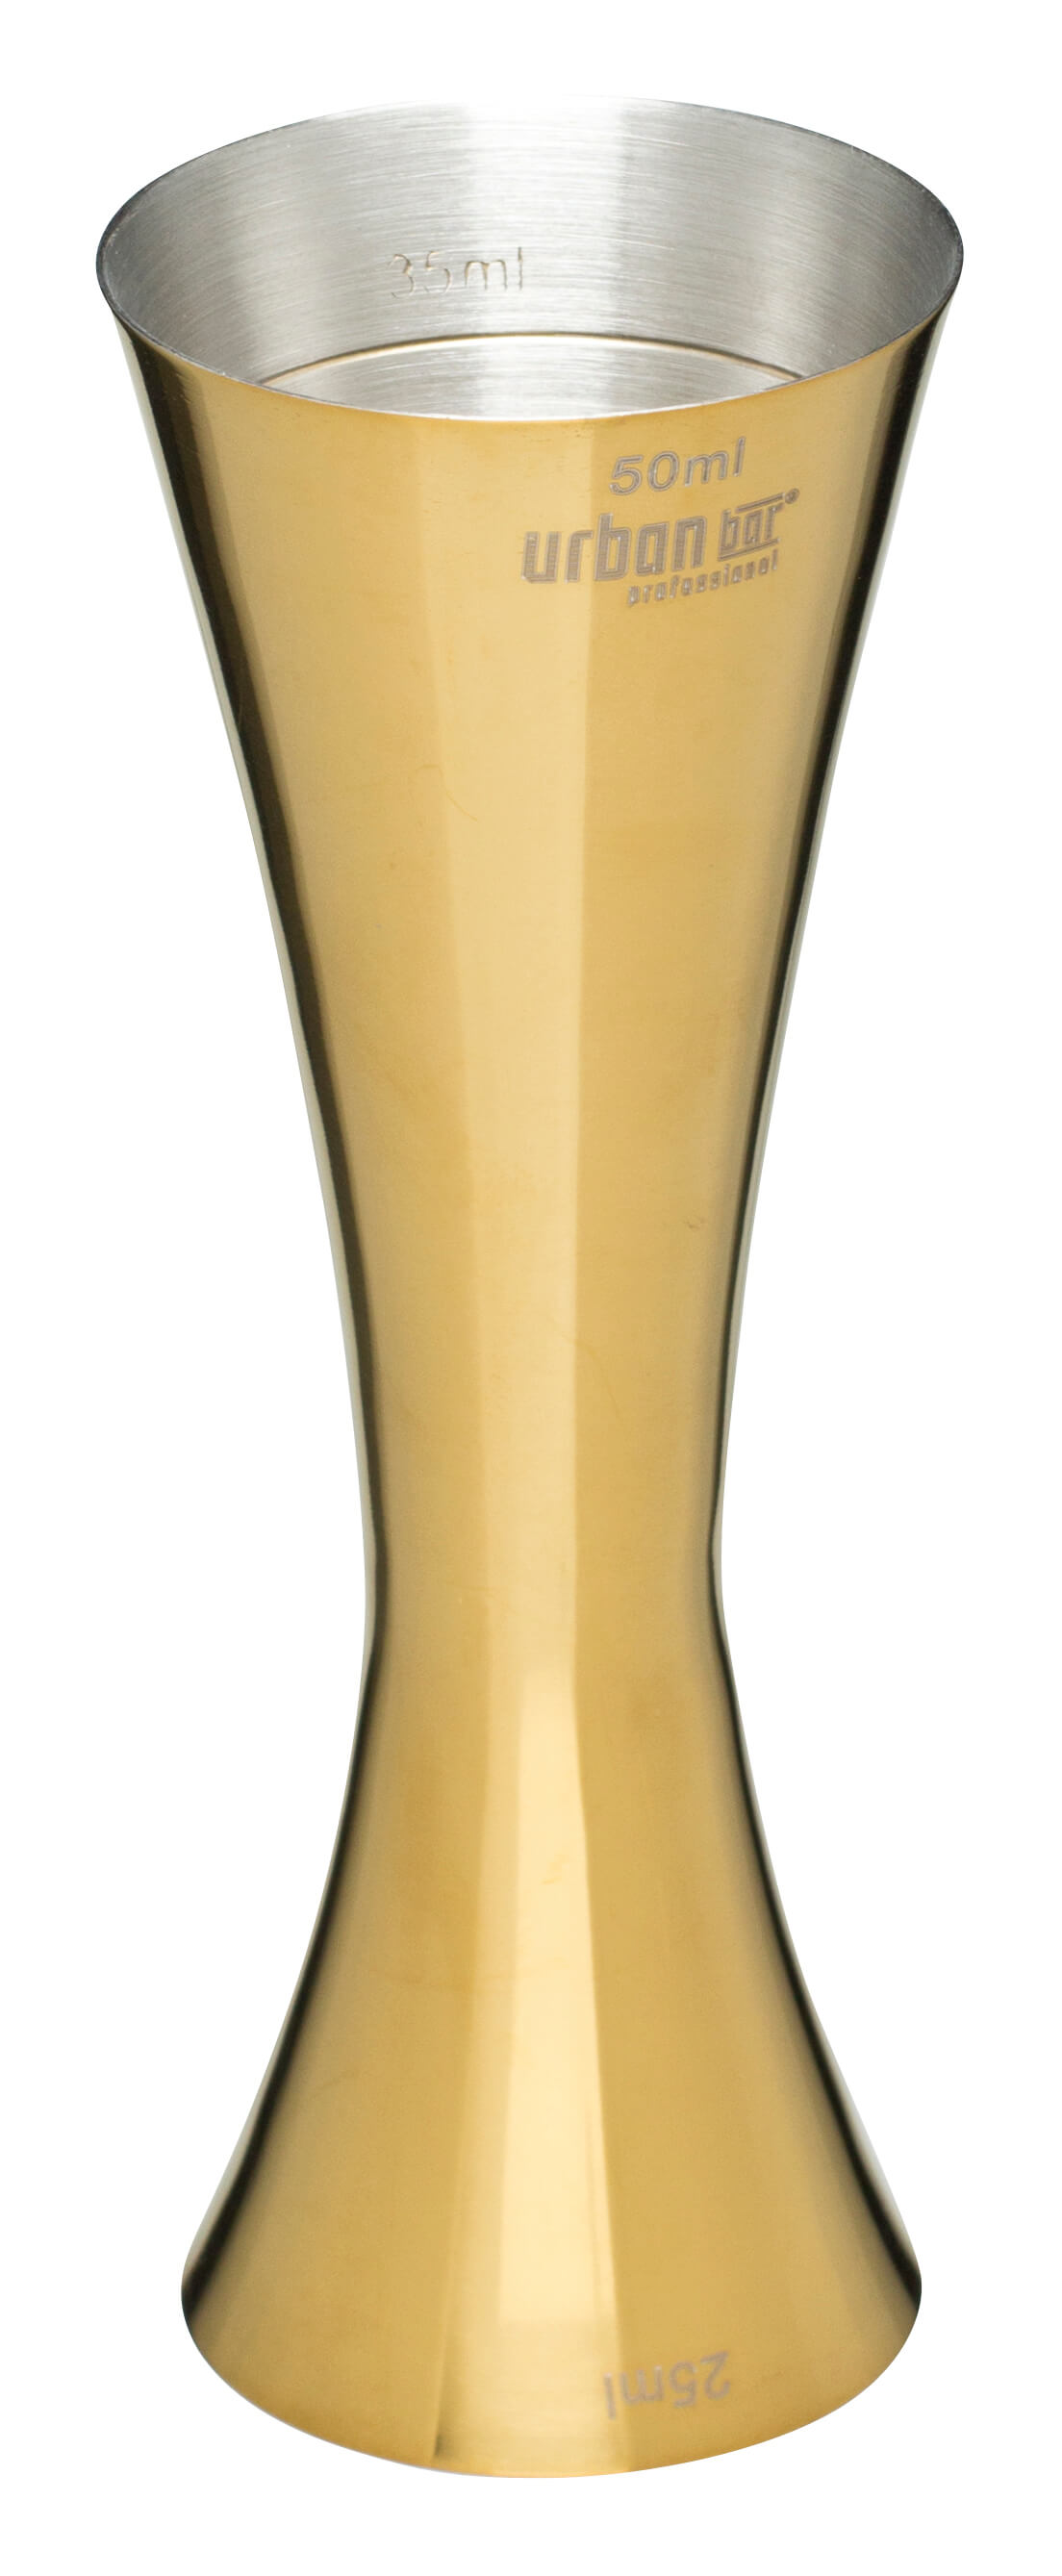 Double jigger Aero, polished, Urban Bar - gold colored (25/50ml)